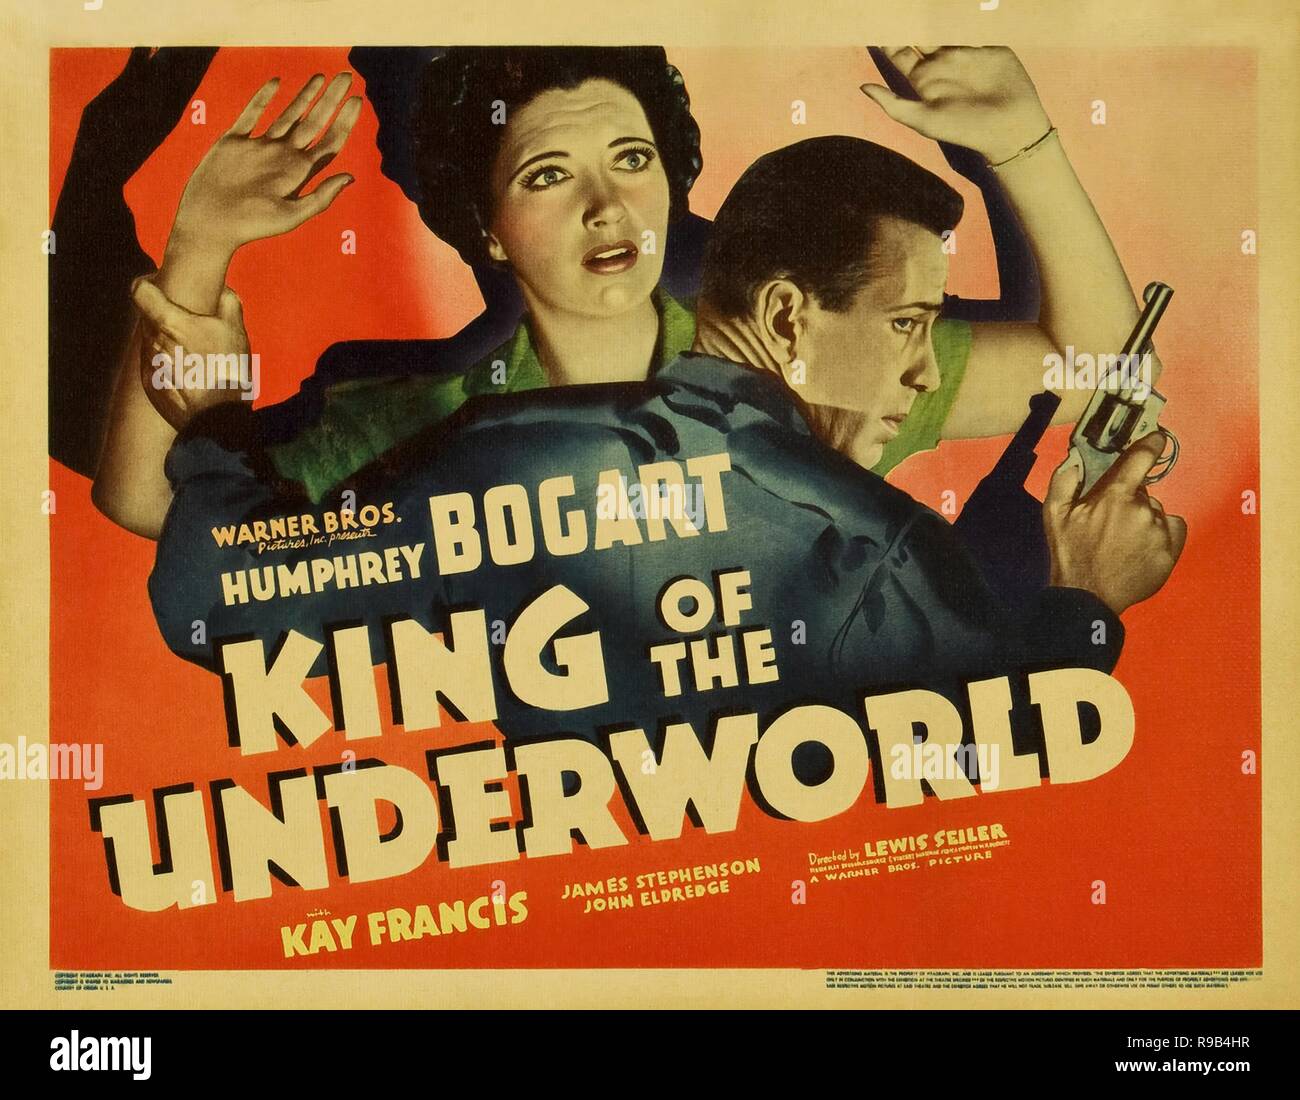 Original film title: KING OF THE UNDERWORLD. English title: KING OF THE UNDERWORLD. Year: 1939. Director: LEWIS SEILER. Credit: WARNER BROTHERS / Album Stock Photo